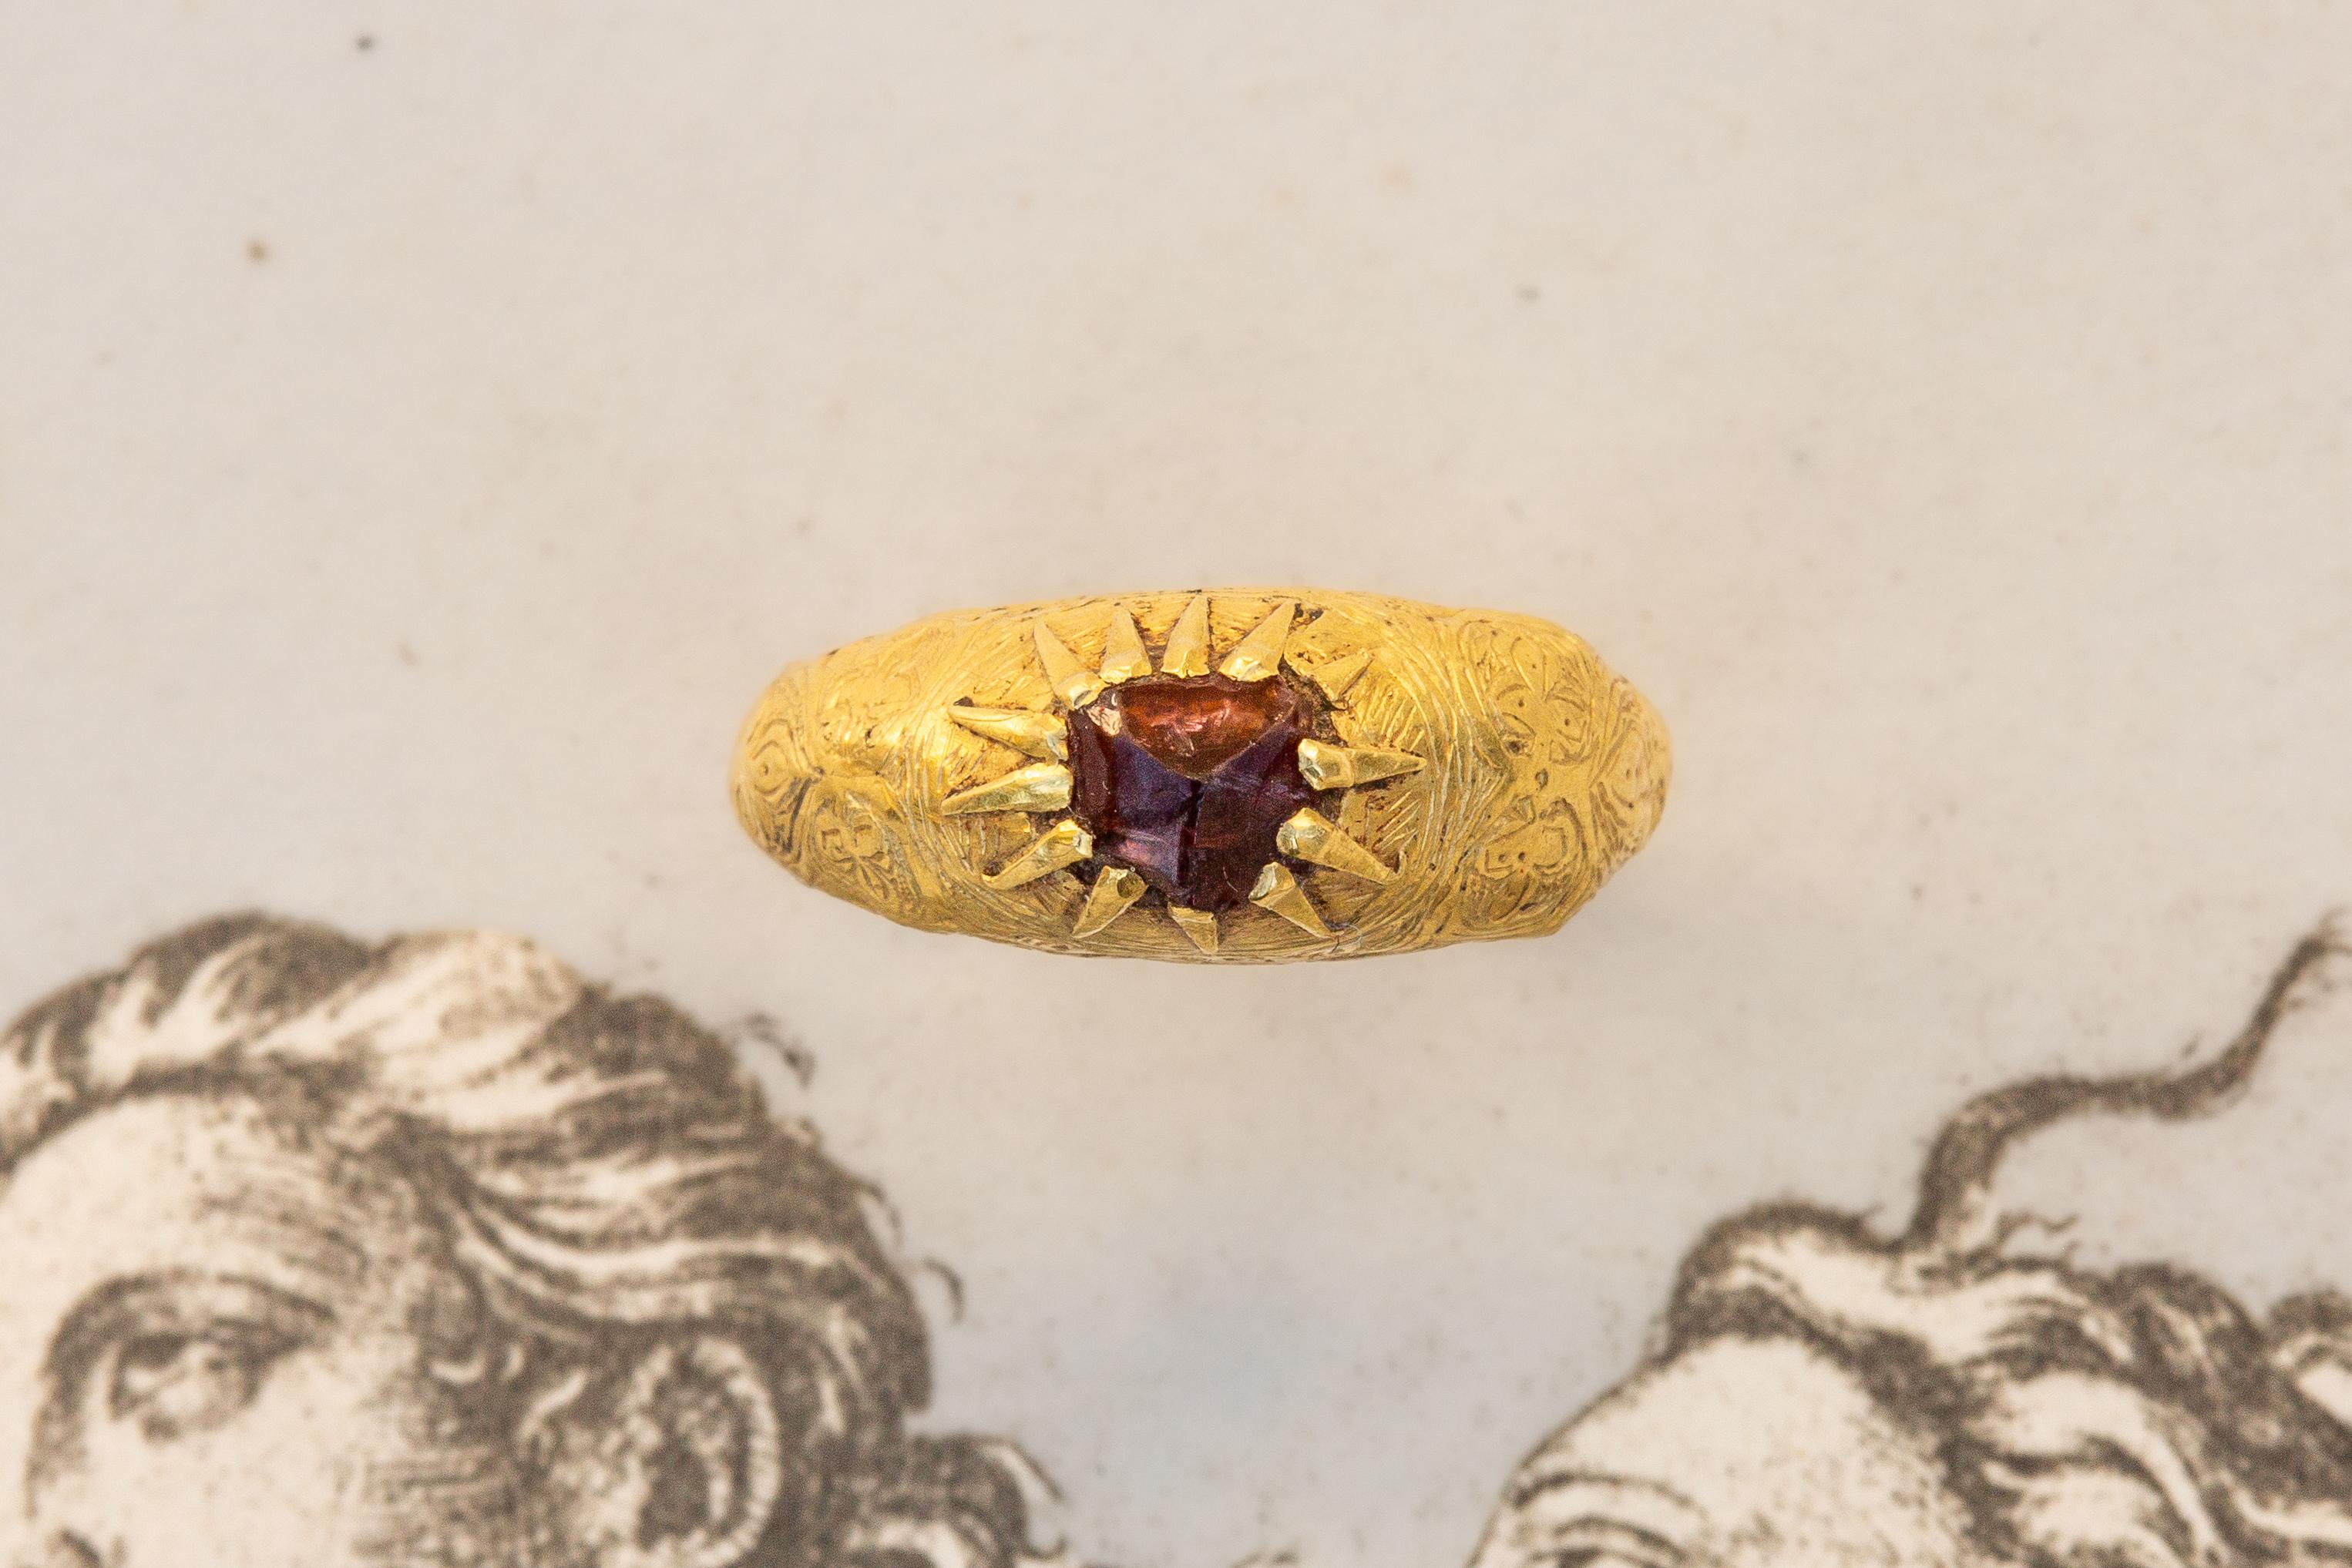 Antique Islamic Seljuk ‘Selçuklu’ Period Gold Ring with Garnet 12th Century AD 2